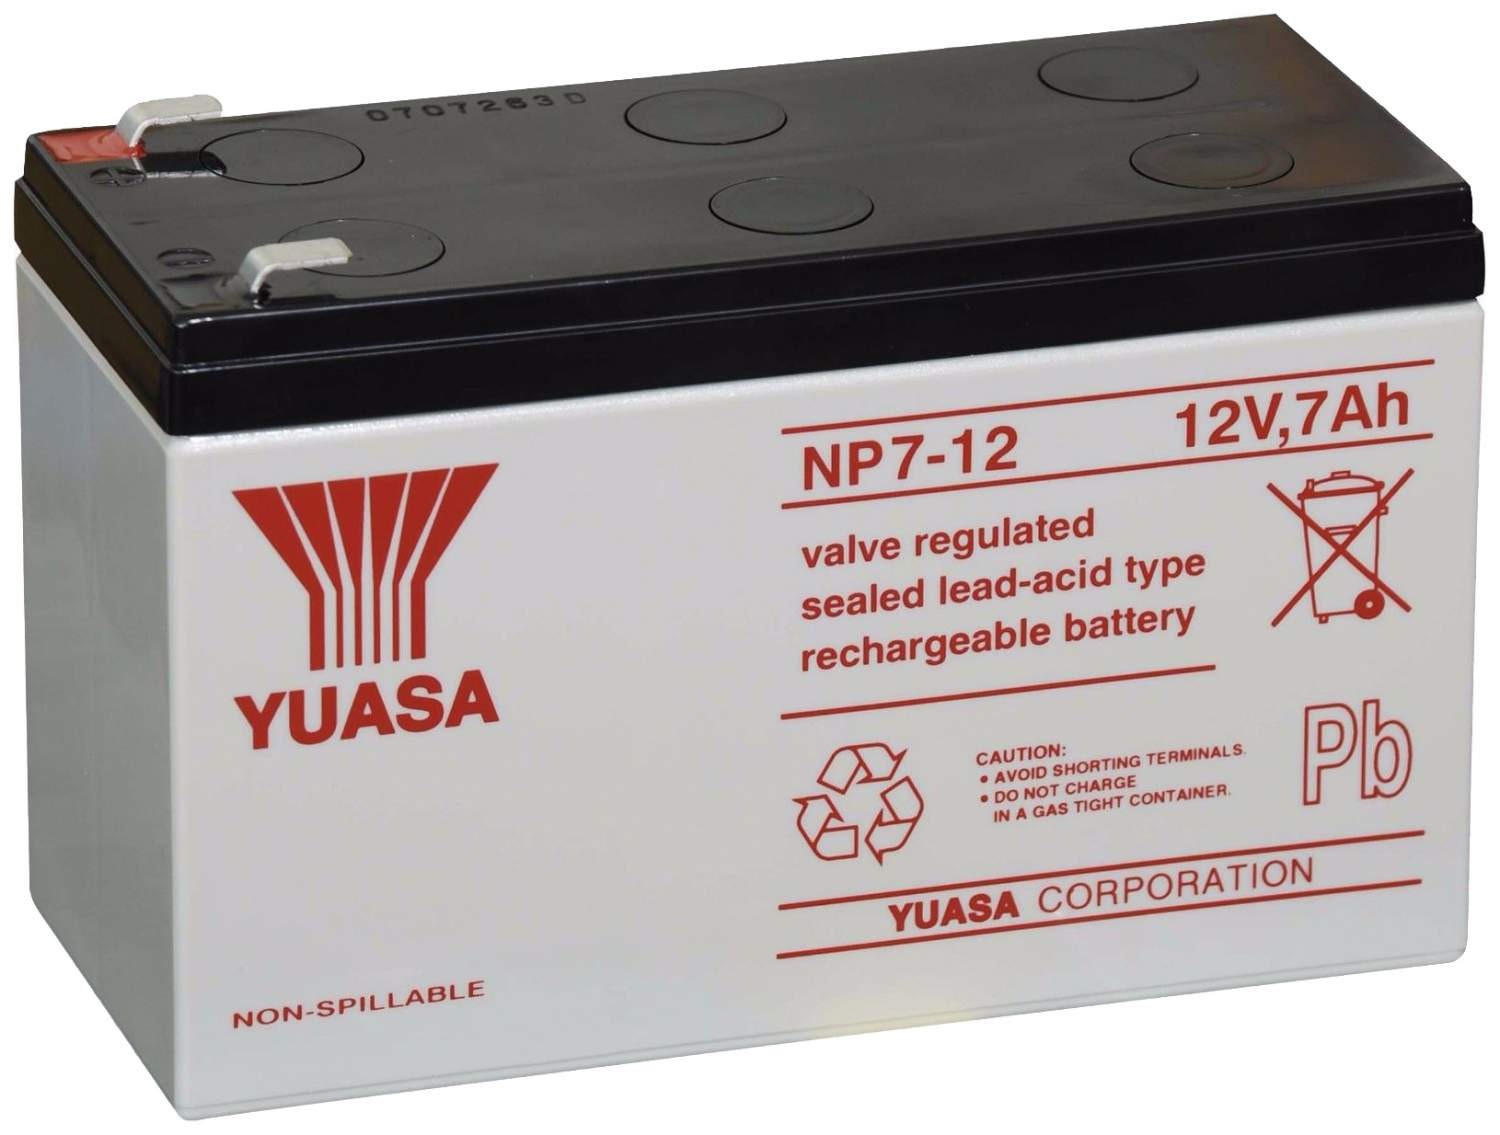 Аккумуляторная батарея Yuasa NP 7-12